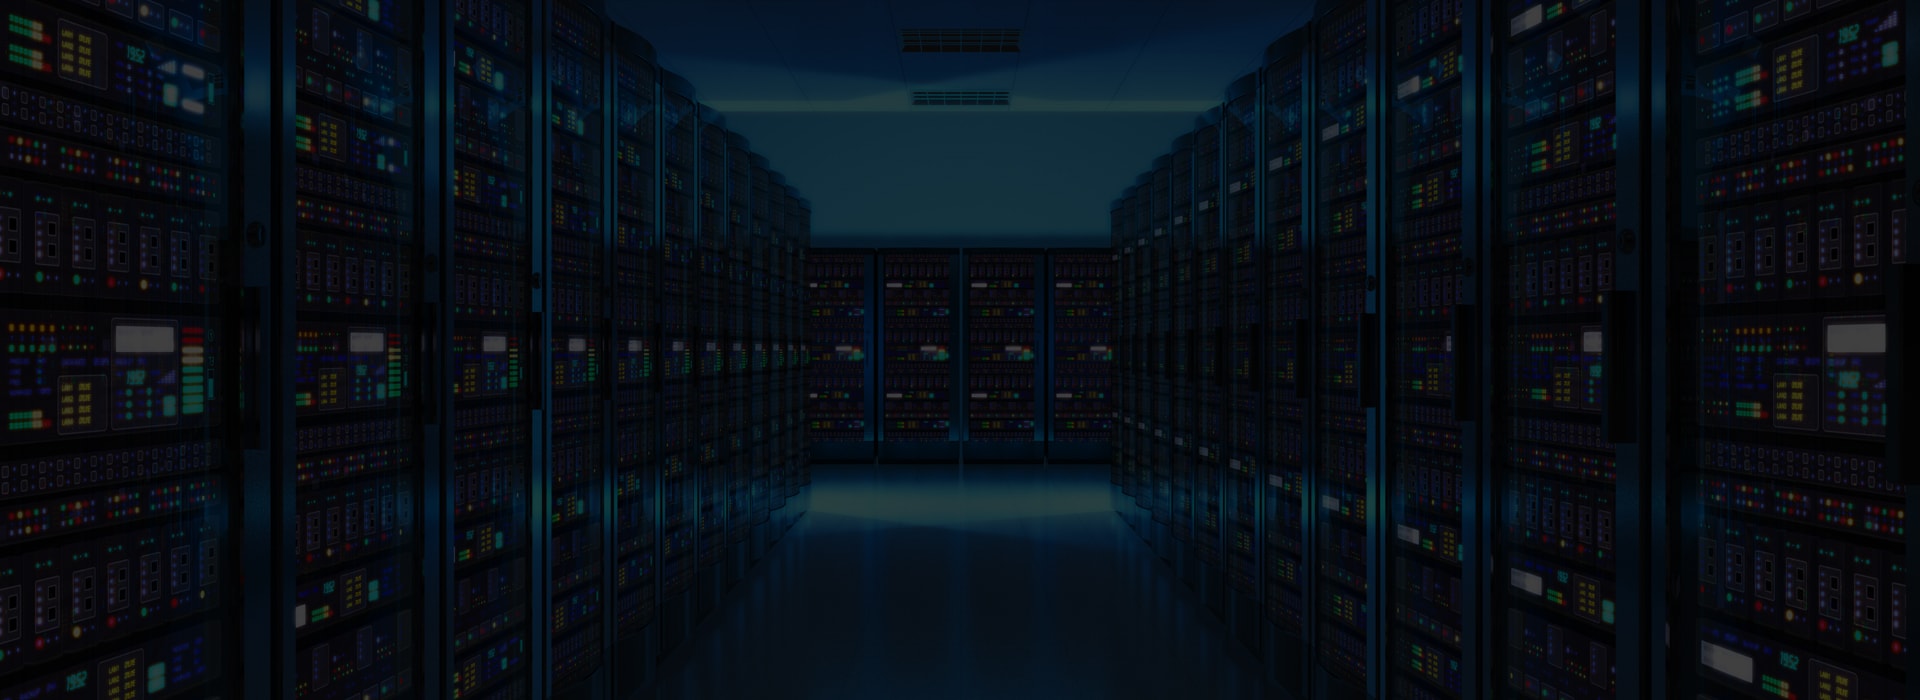 Modern API web network and Oracle 12 database storage server room